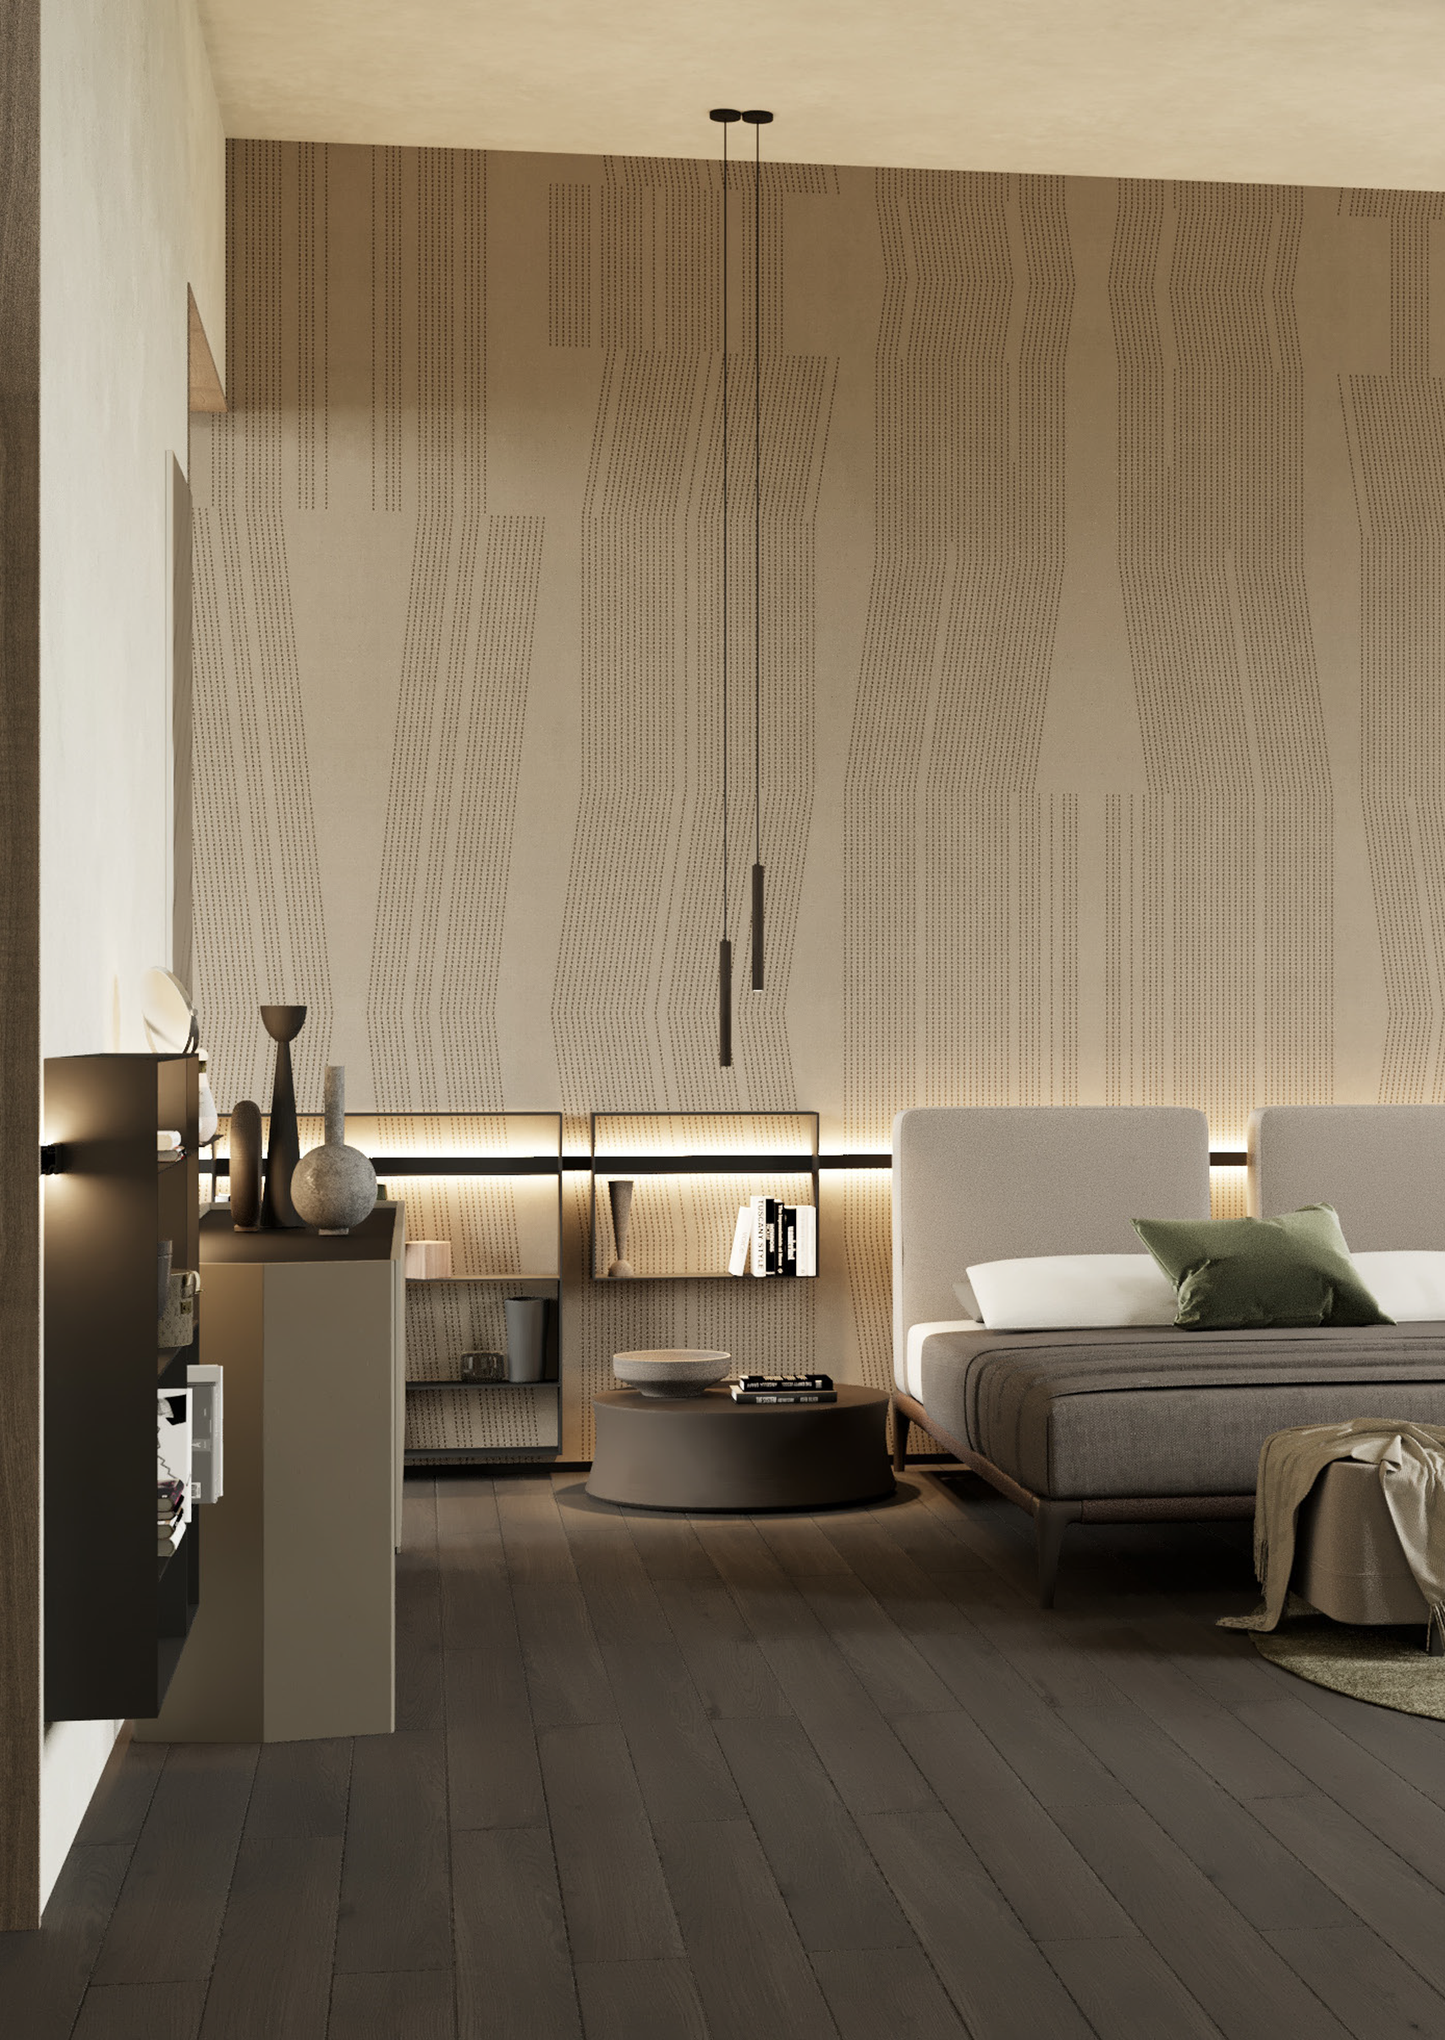 【MADE IN ITALY】Customizable Hanging Shelf System 意大利製 組合式燈光及層架系統